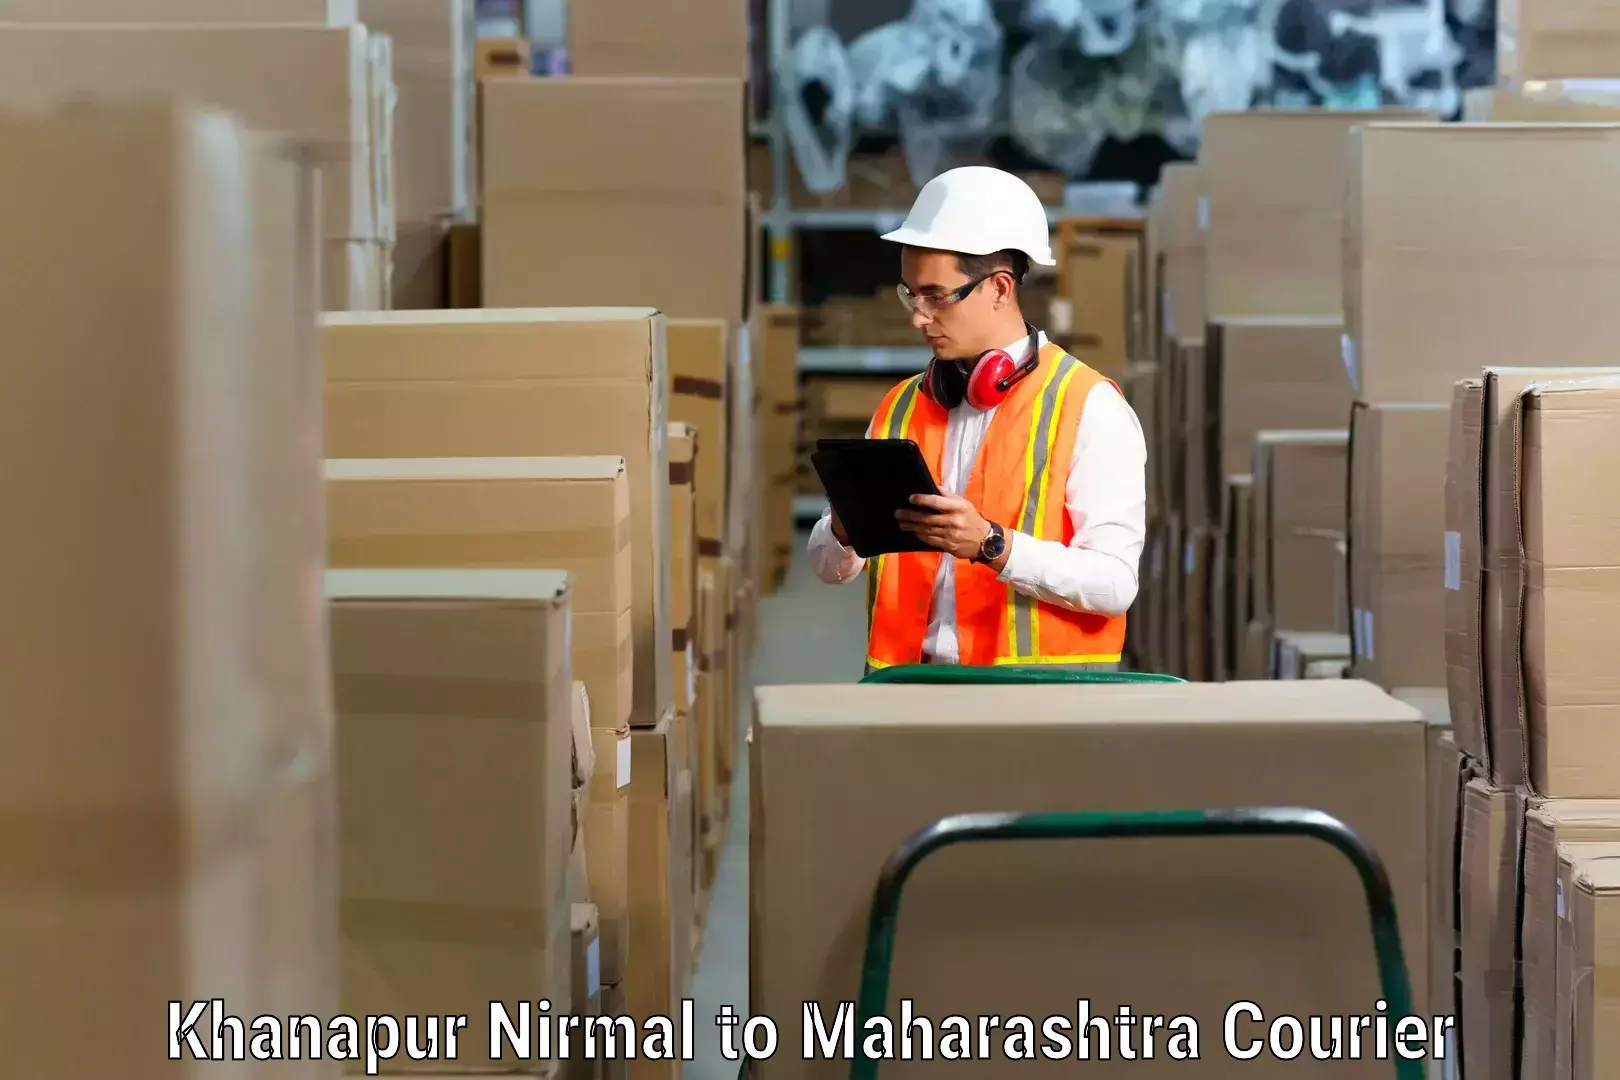 Furniture transport company Khanapur Nirmal to Kolhapur